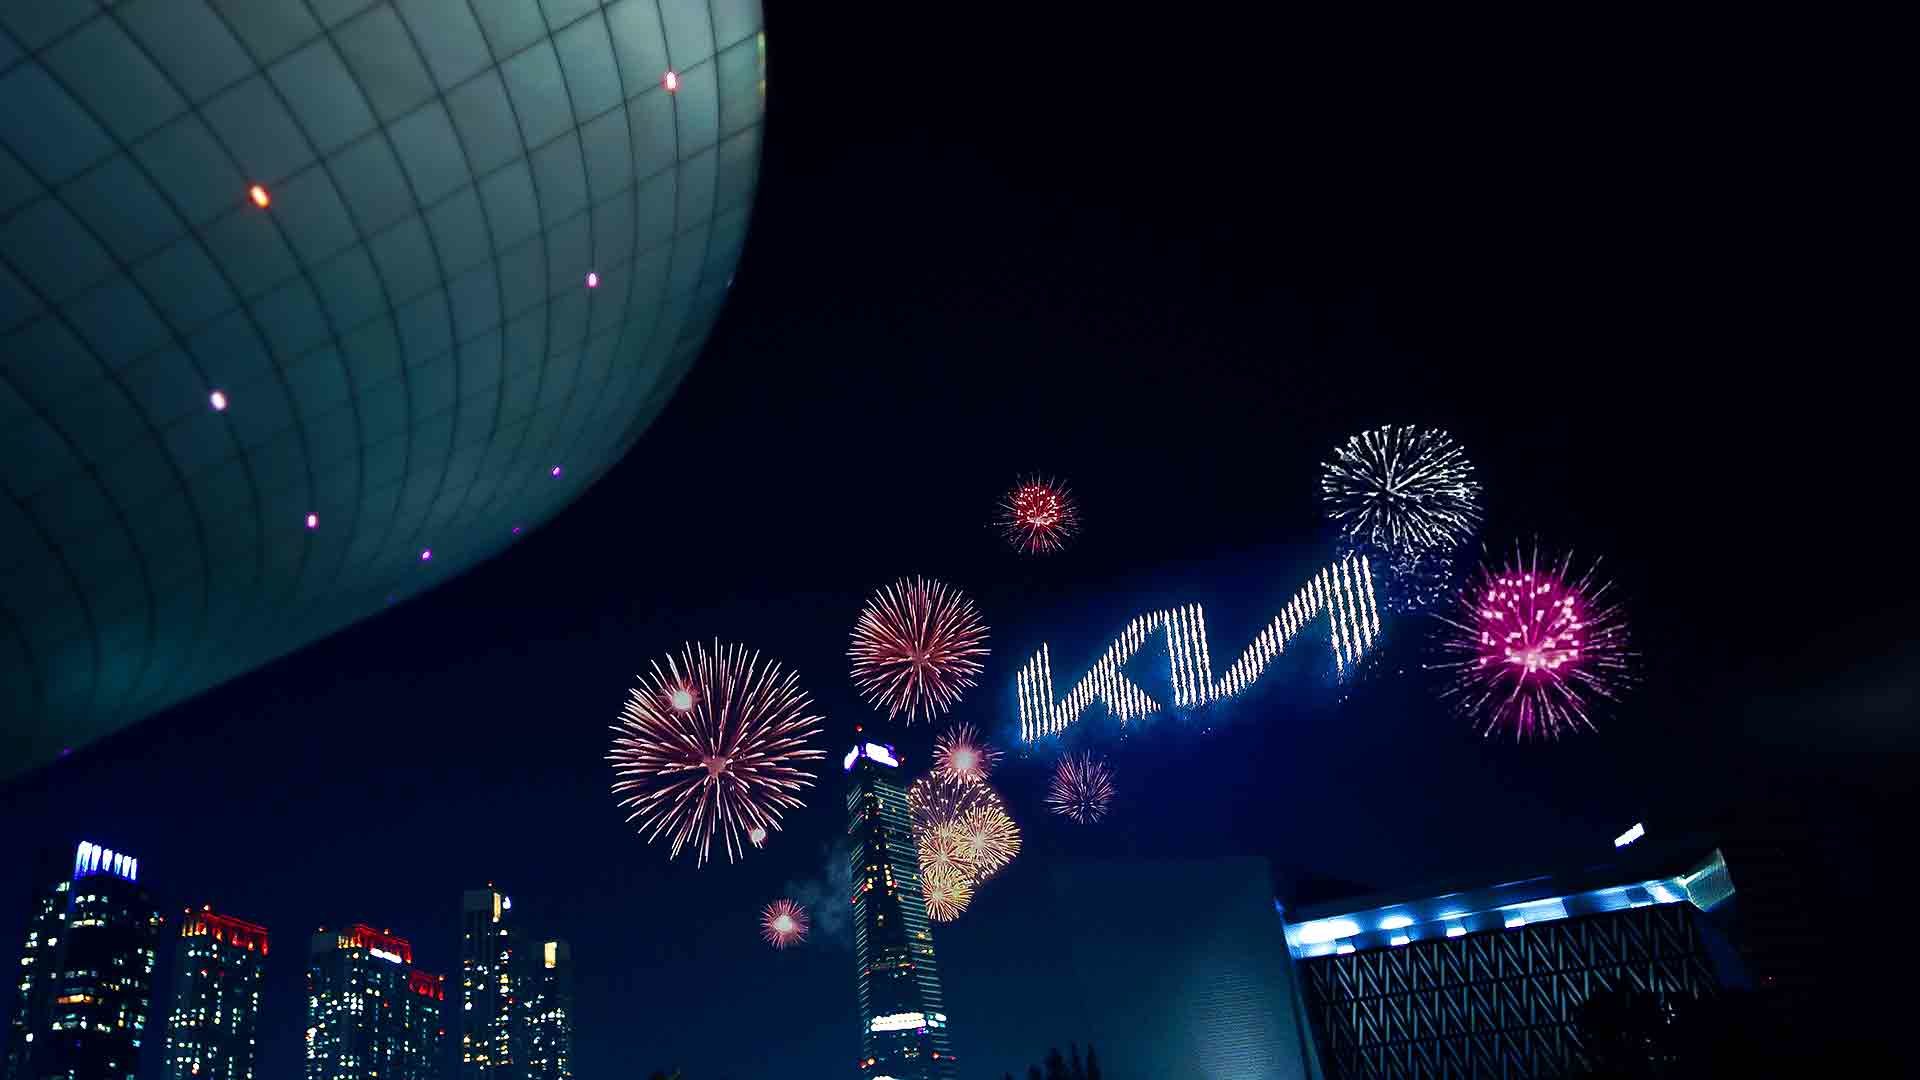 New Kia logo in fireworks